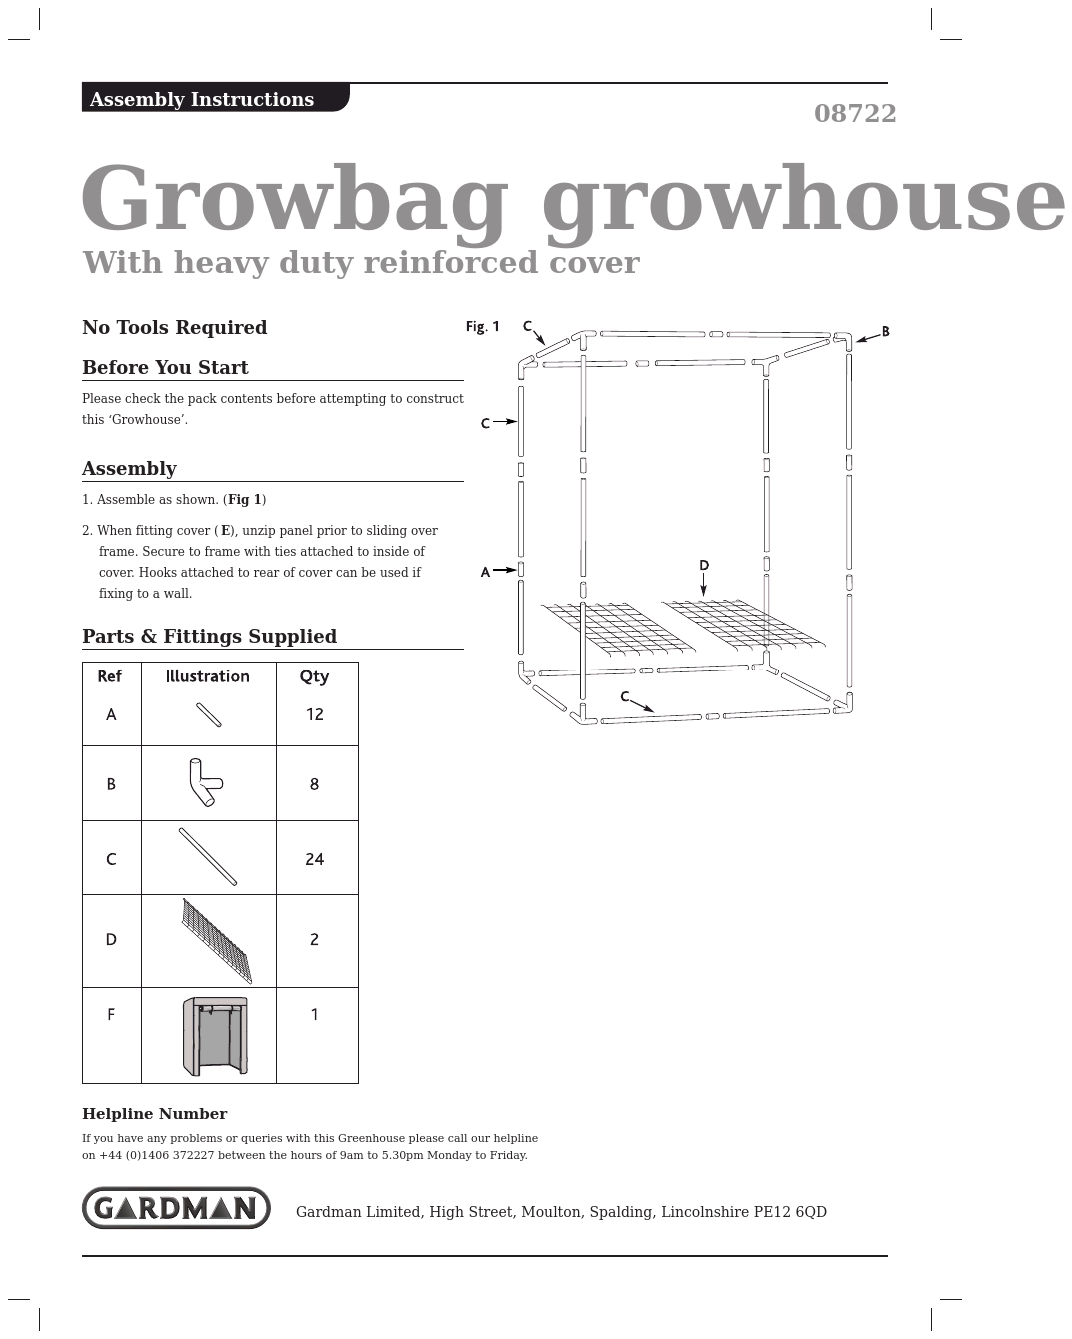 Growbag growhouse Reinforced